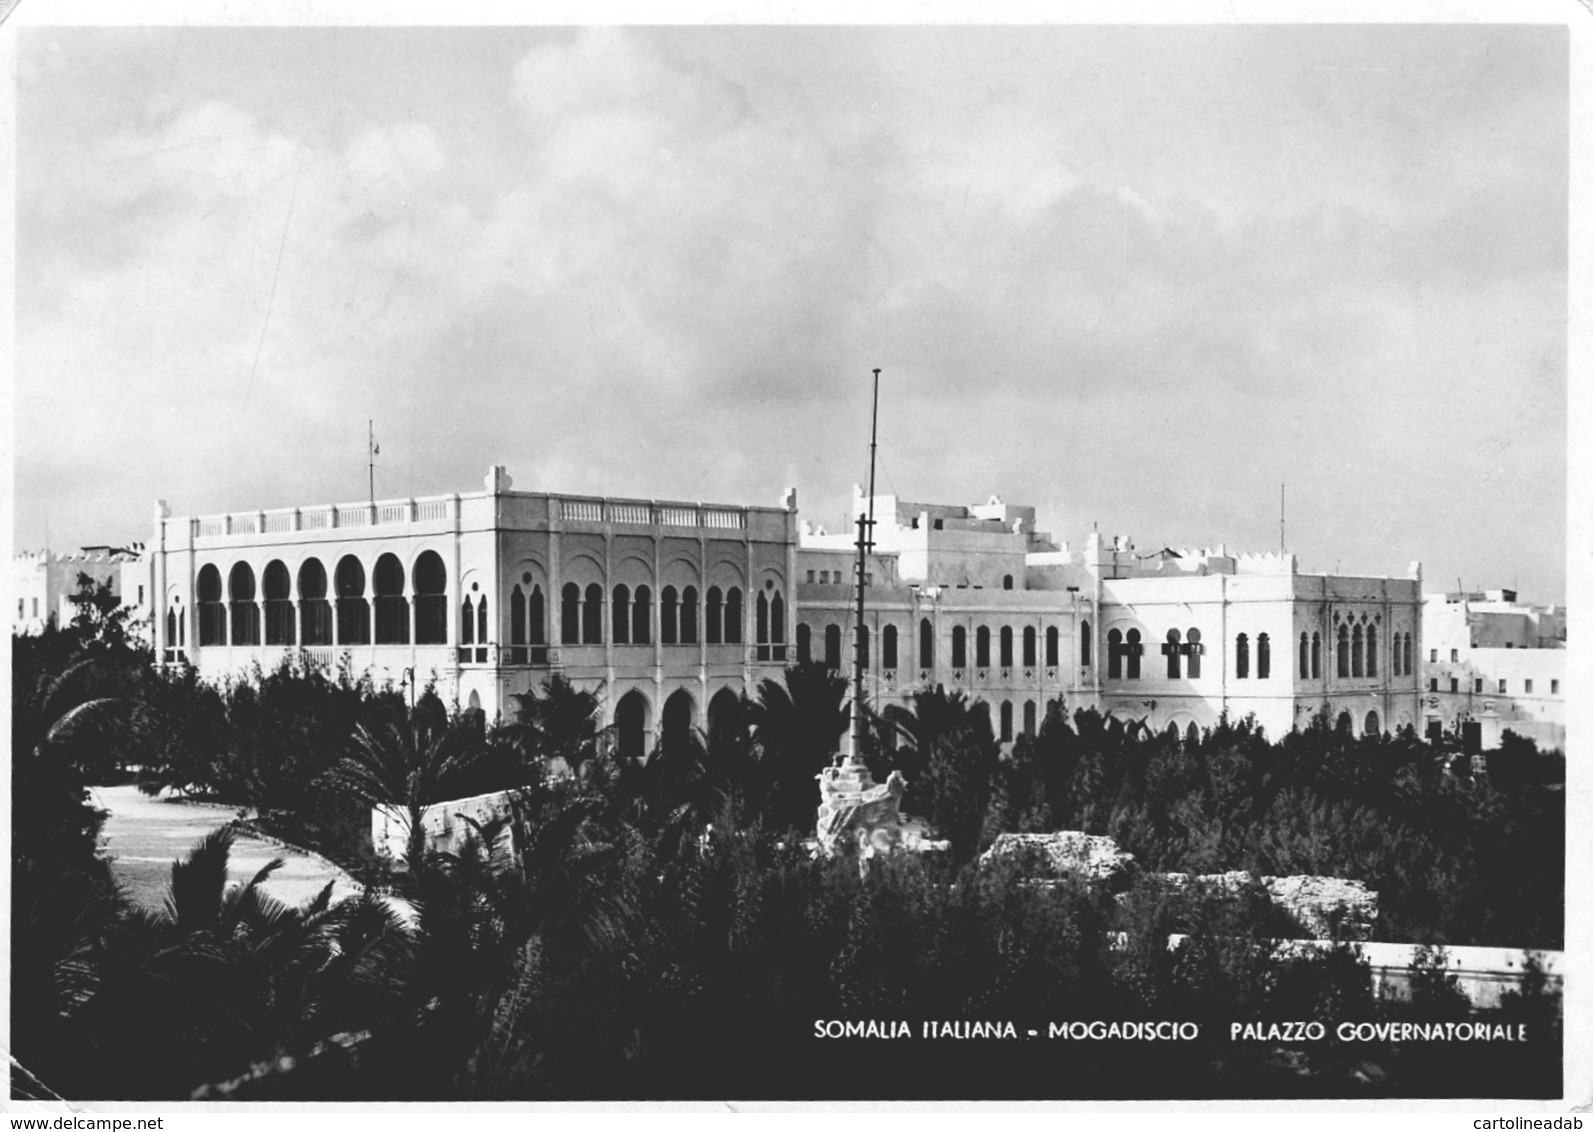 [DC7867] CPA - SOMALIA ITALIANA - MOGADISCIO - PALAZZO GOVERNATORIALE - Viaggiata1936 - Old Postcard - Somalia